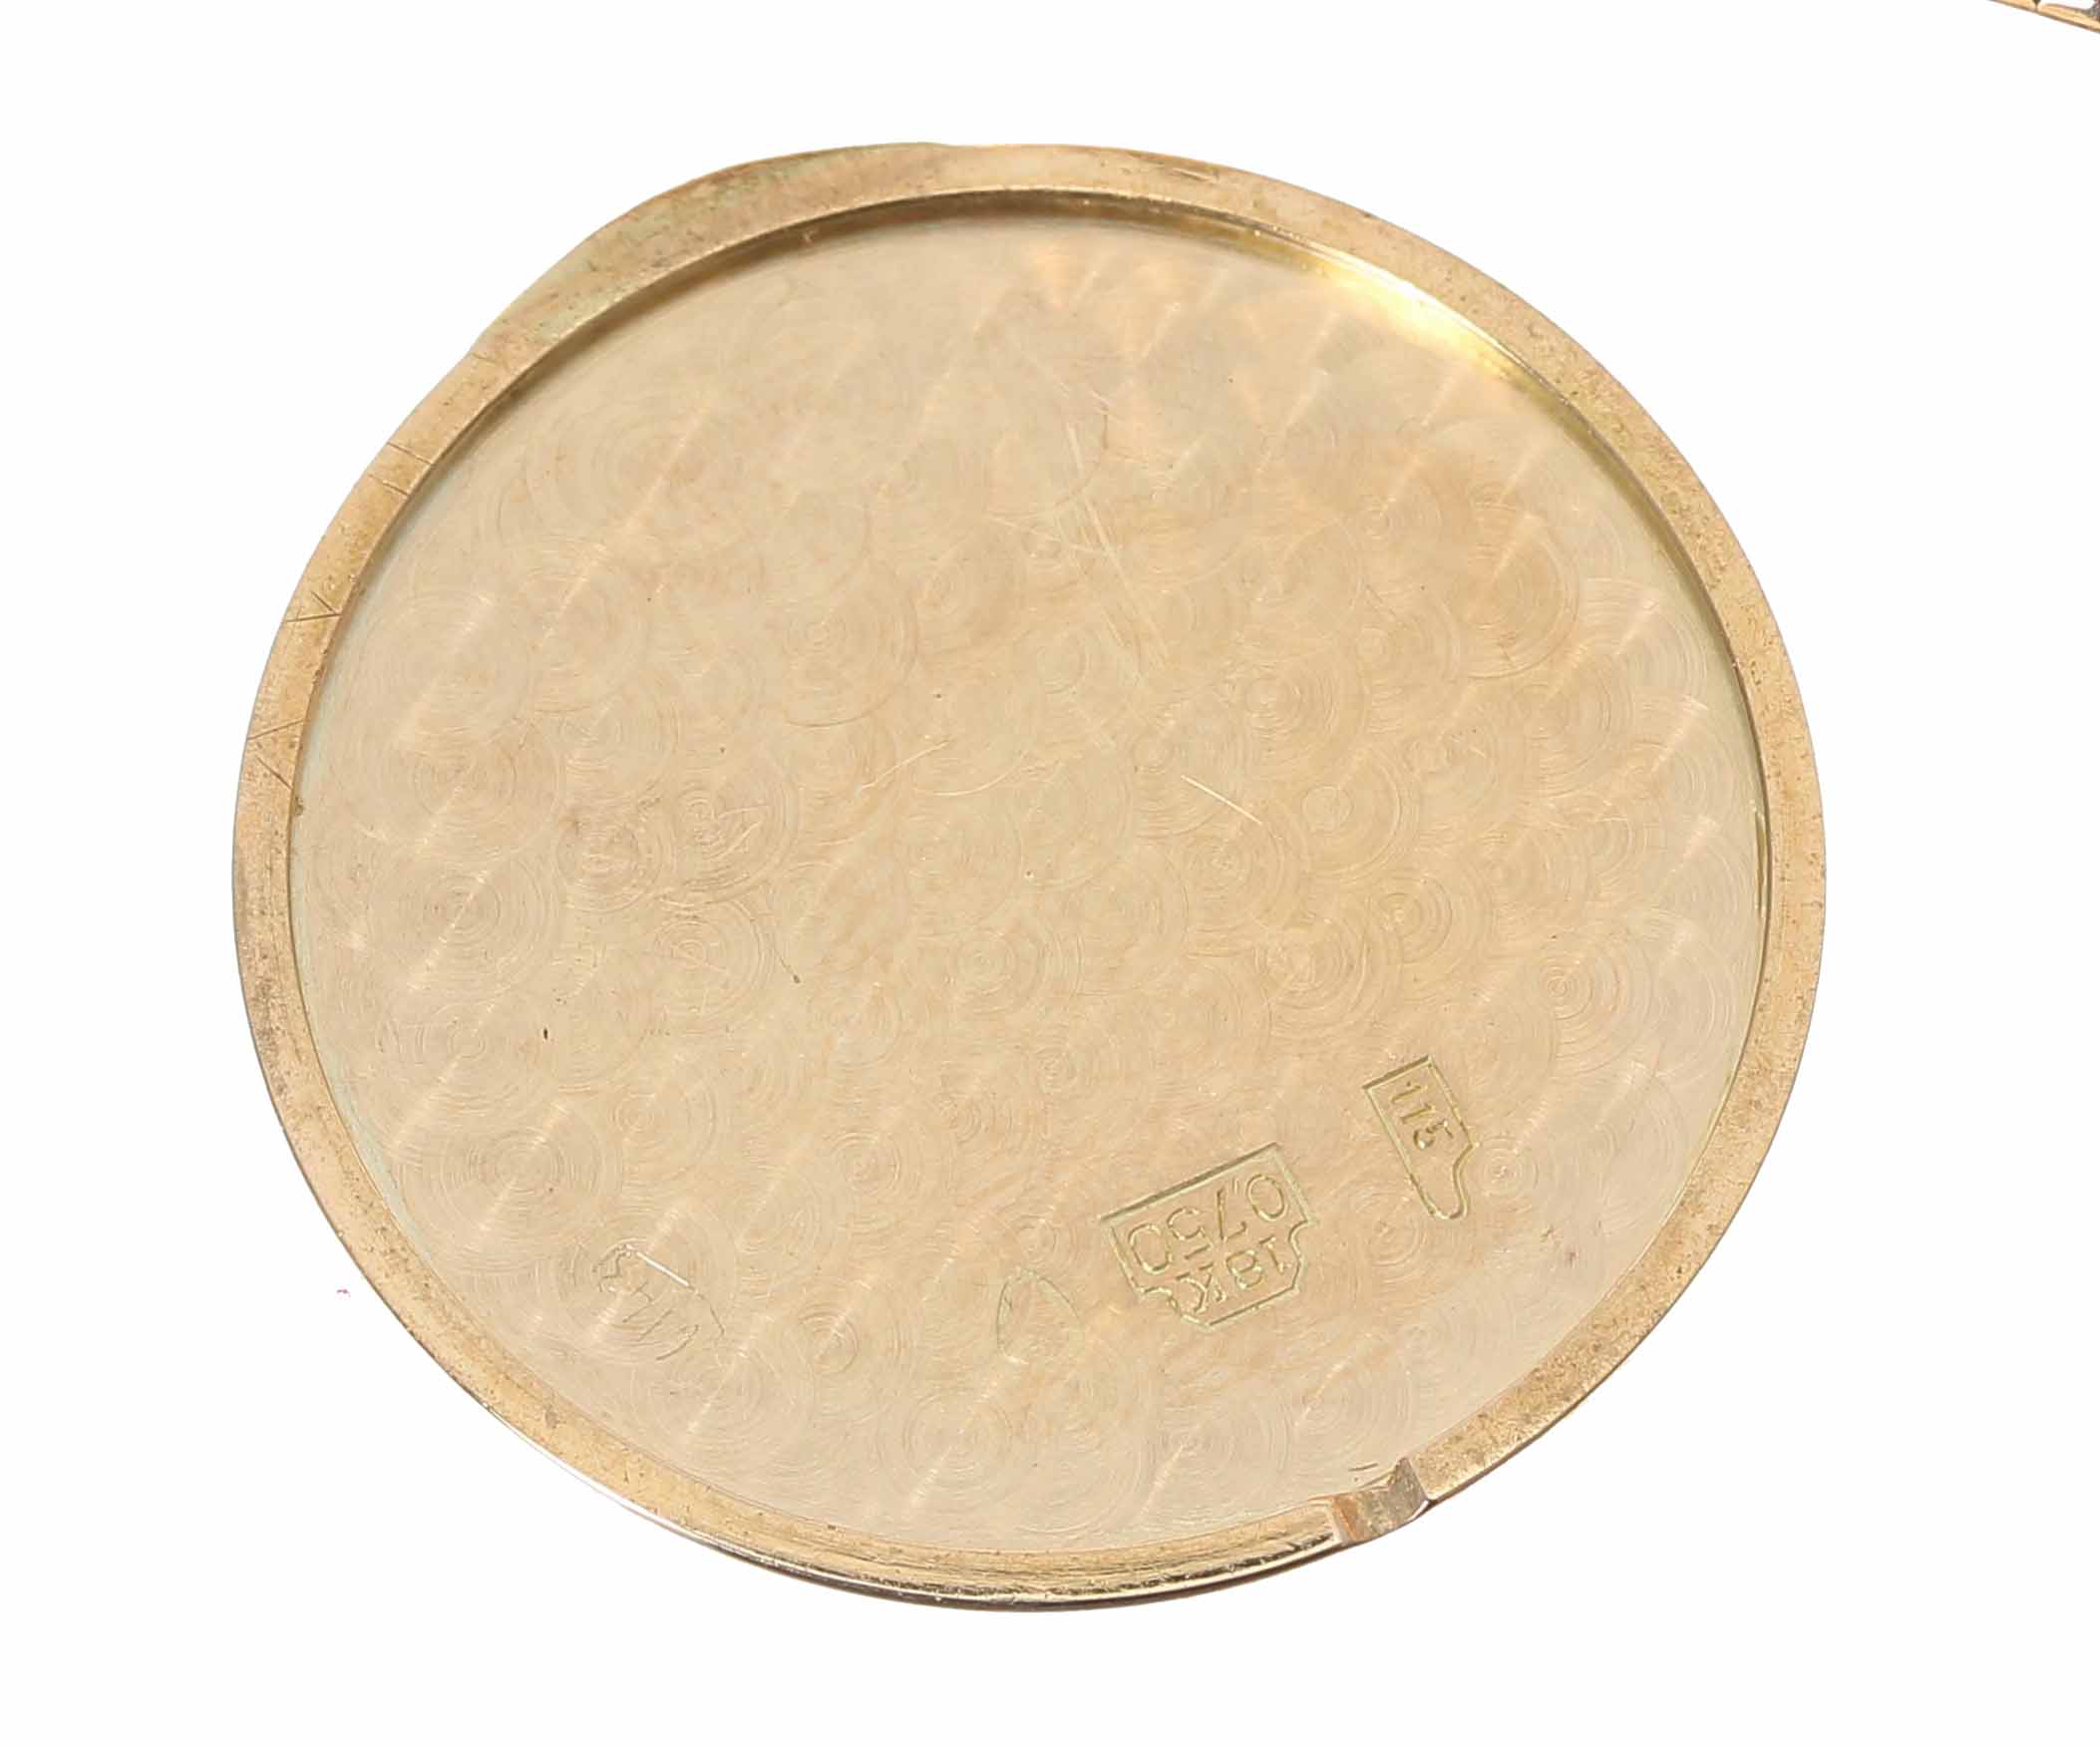 Universal Genéve slim 18ct pink gold gentleman's wristwatch, case no. 5320 5 9904 5, circular dial - Image 4 of 4